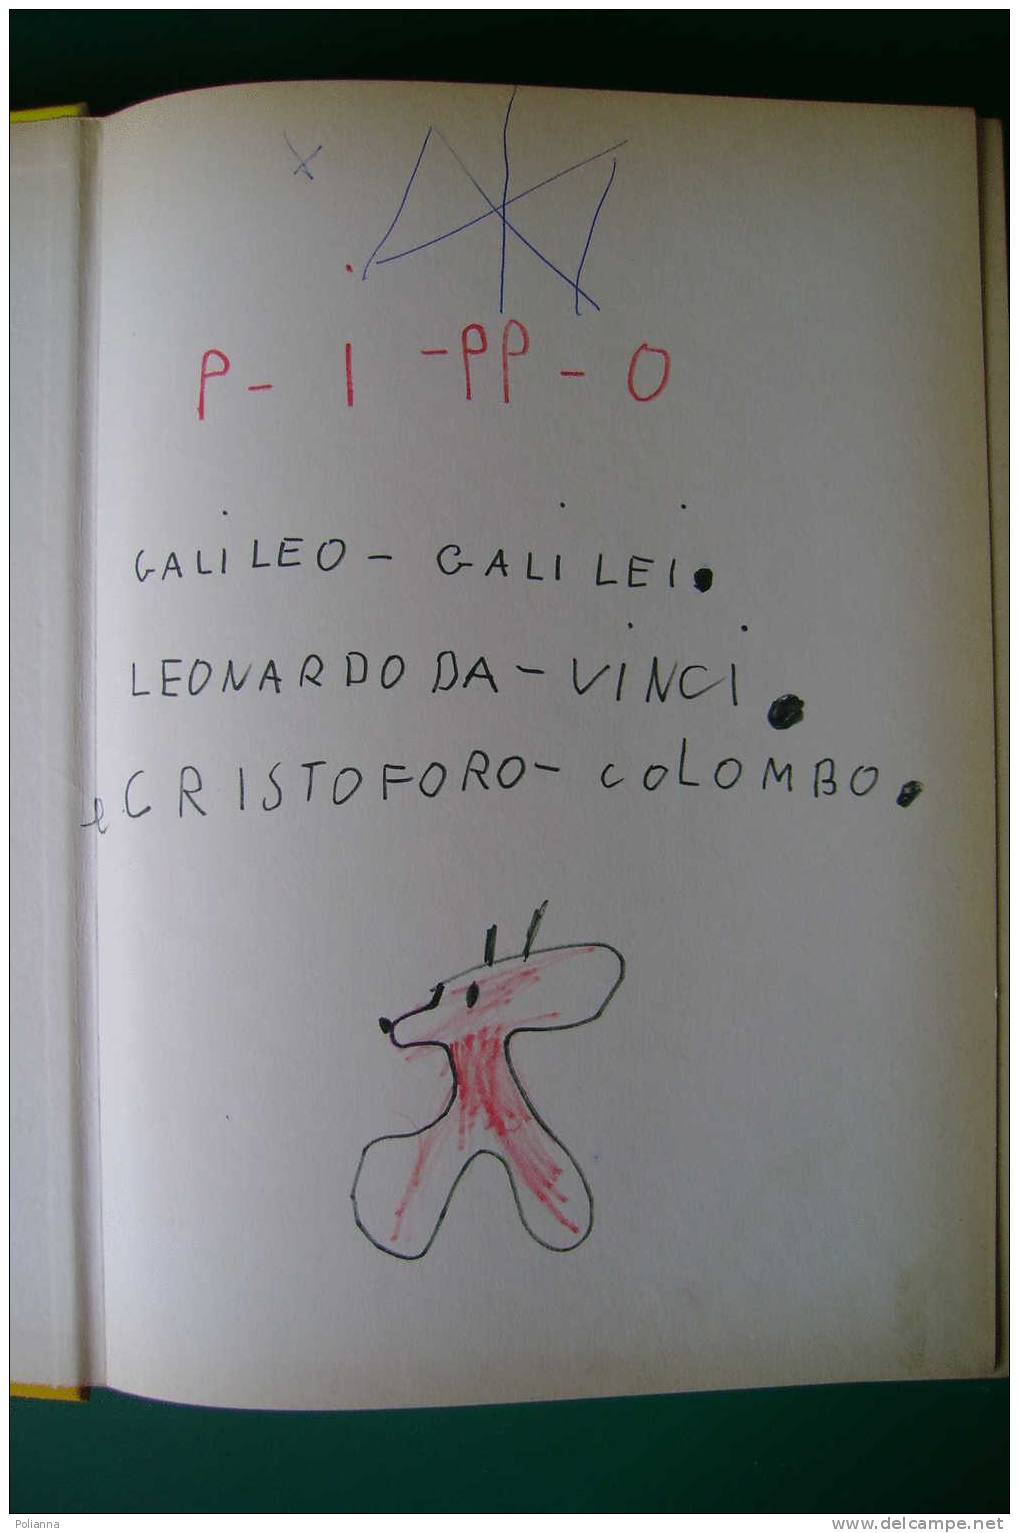 PDT/17 W.Disney IL GRANDE PIPPO Mondadori I^ Ed.1979 - Disney